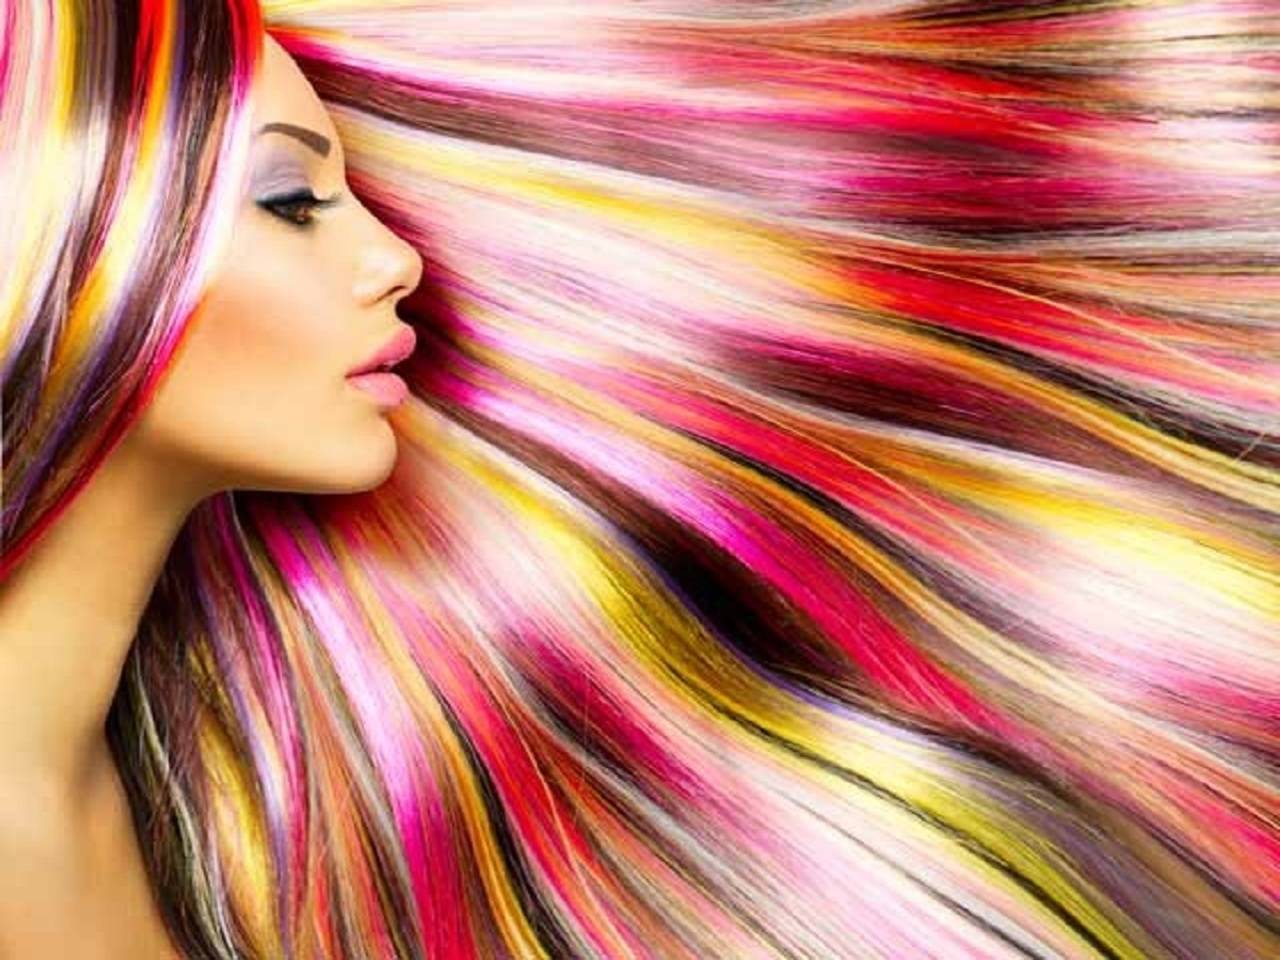 15 Best Hair Color Sprays For A New Look